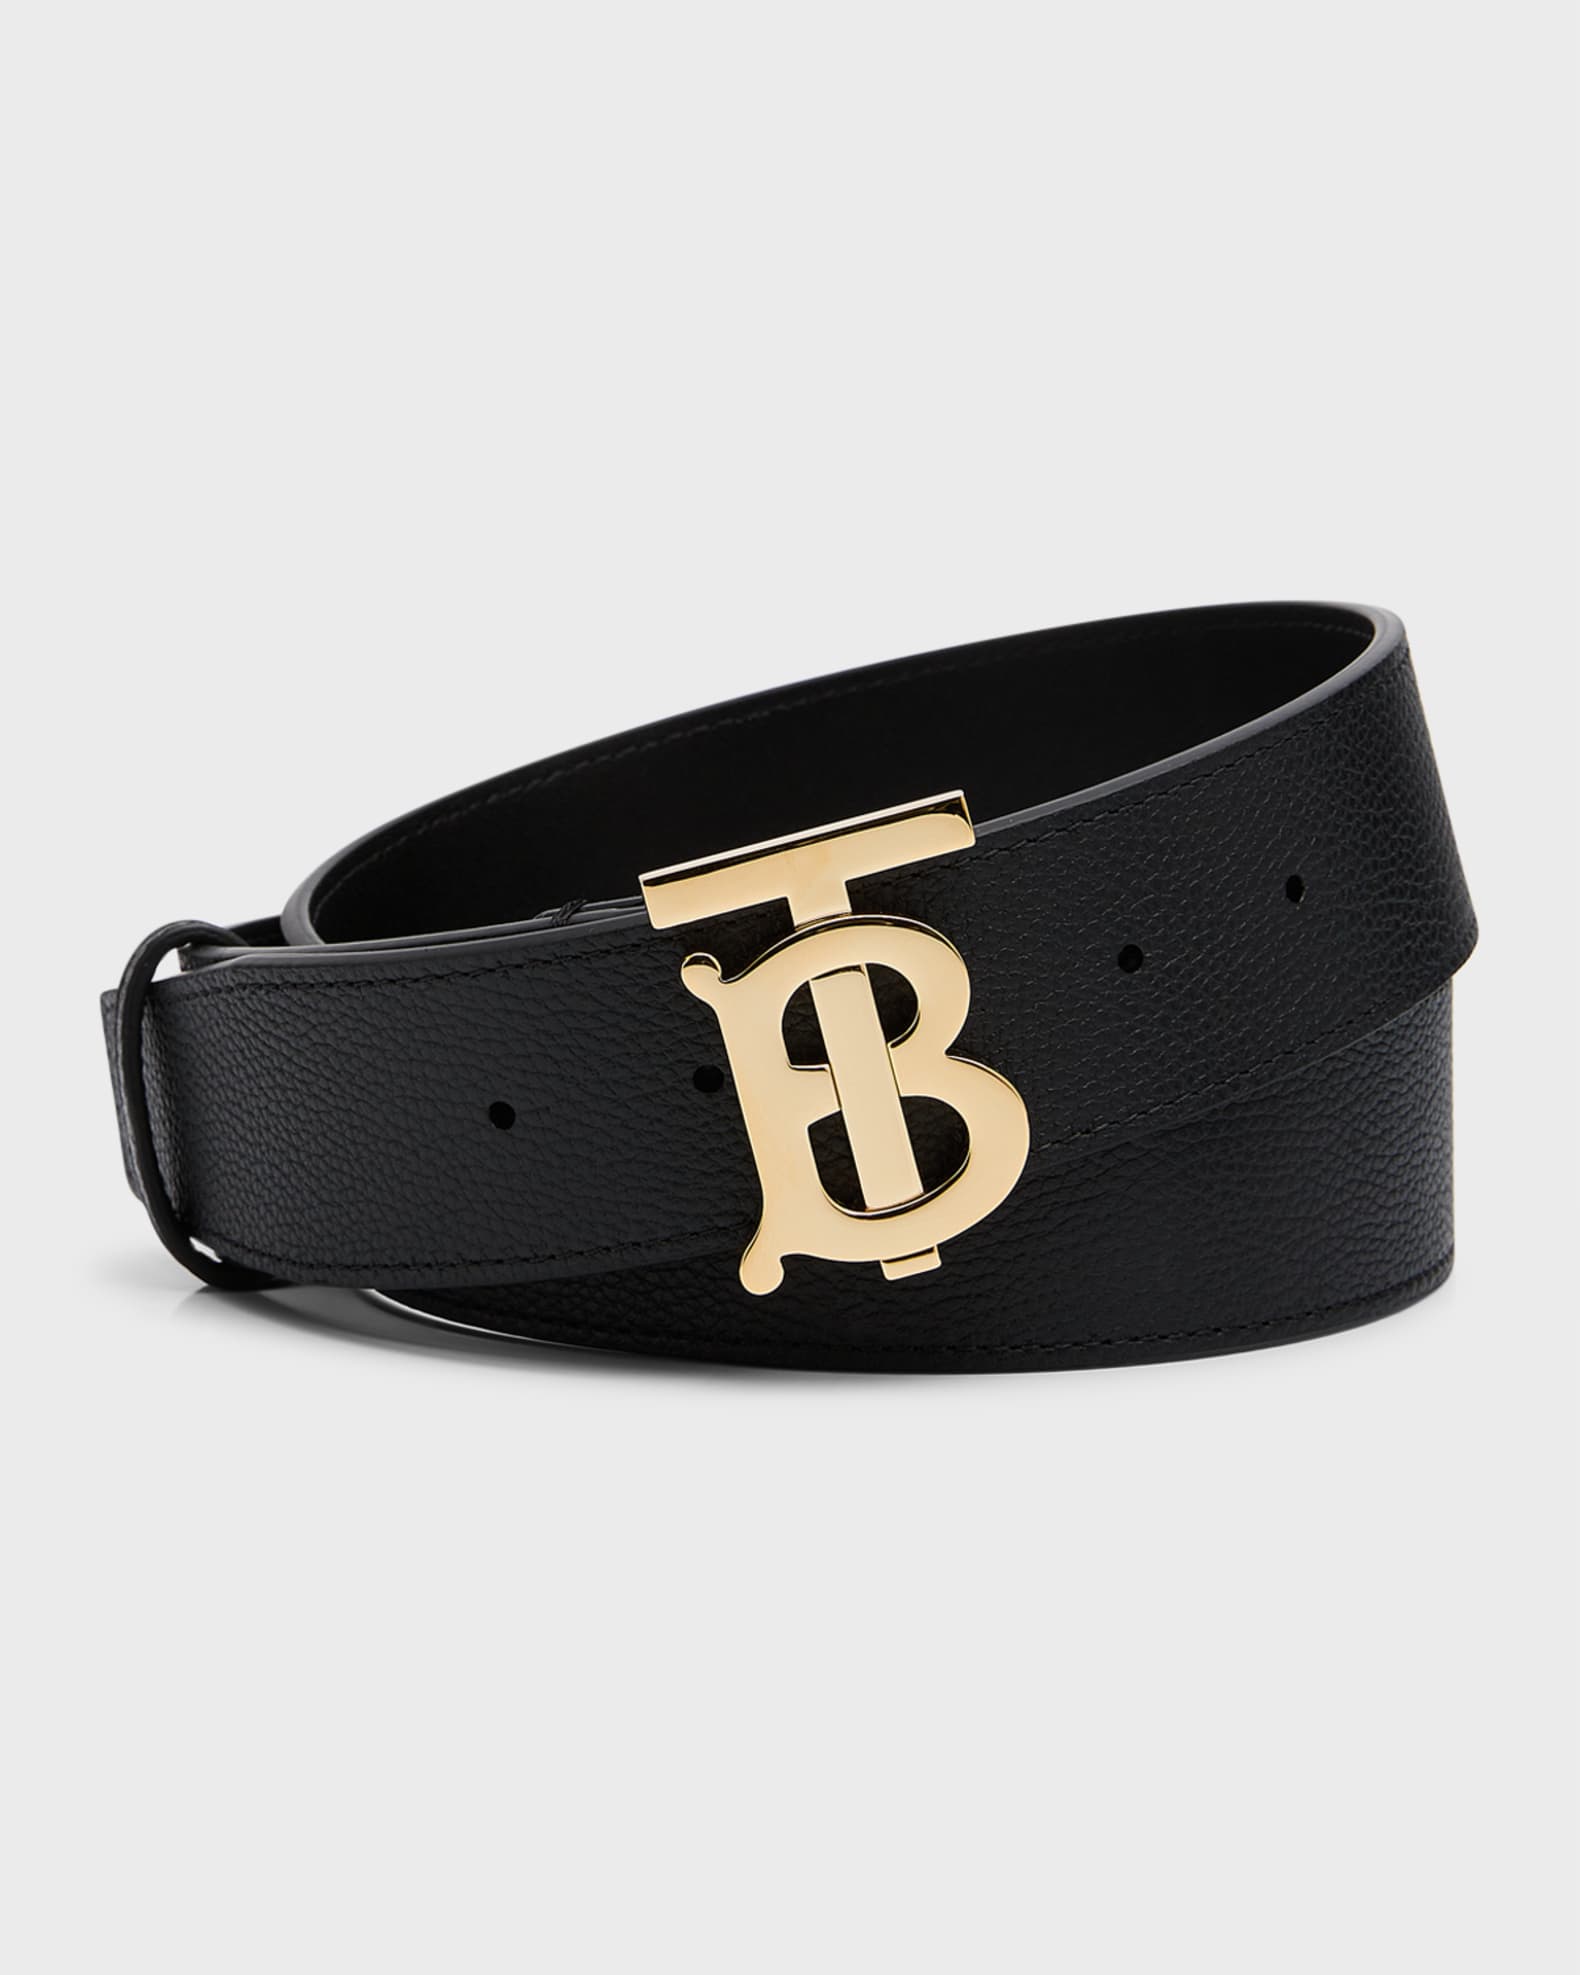 Burberry Leather Double TB Monogram Belt